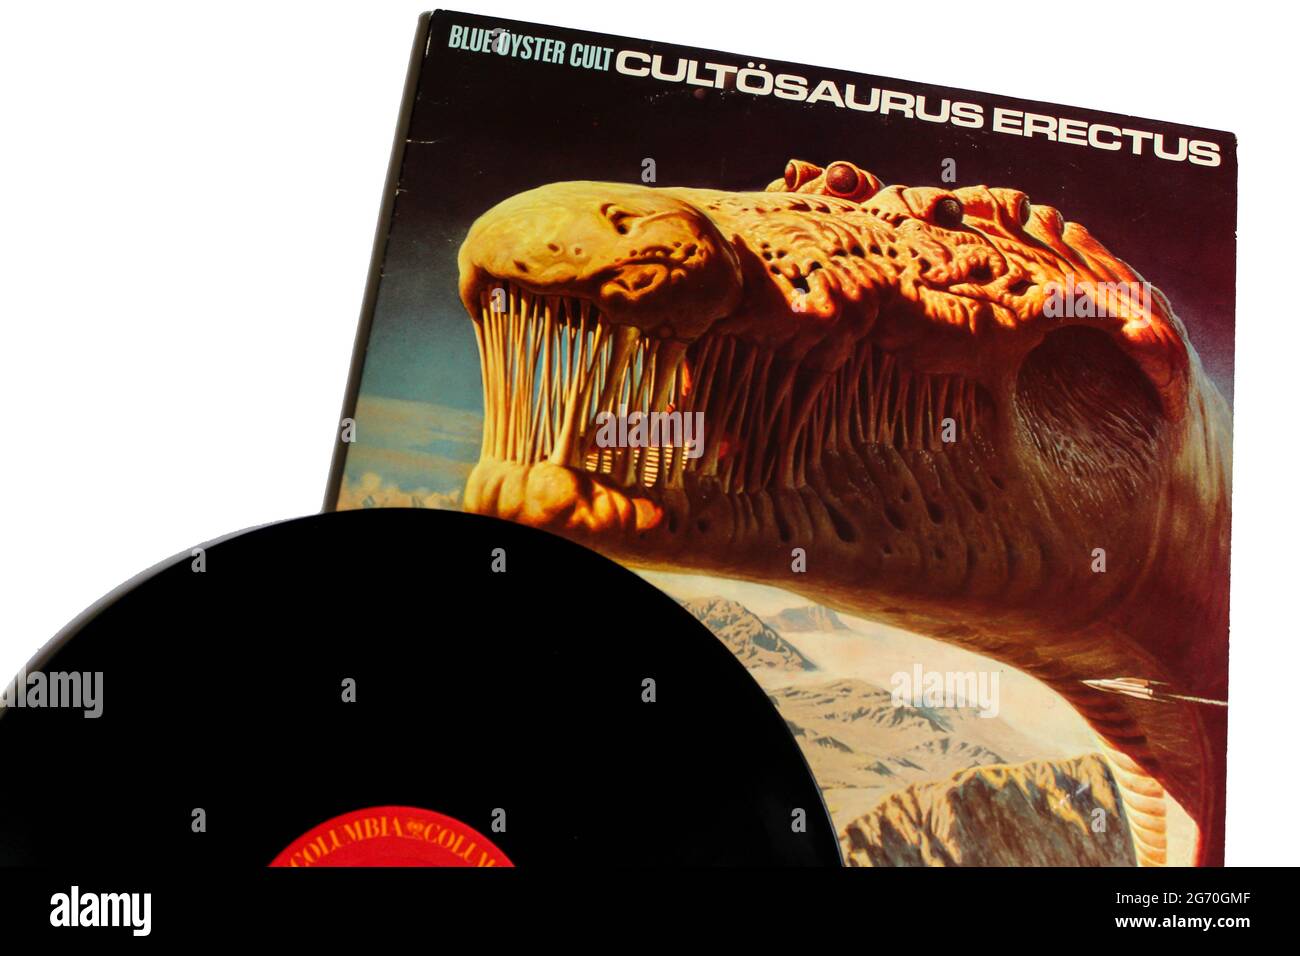 Heavy Metal, Hard Rock und Progressive Rock Künstler, Blue Oyster Cult Musikalbum auf Vinyl LP Disc. Titel: Cultosaurus Erectus Album Cover Stockfoto